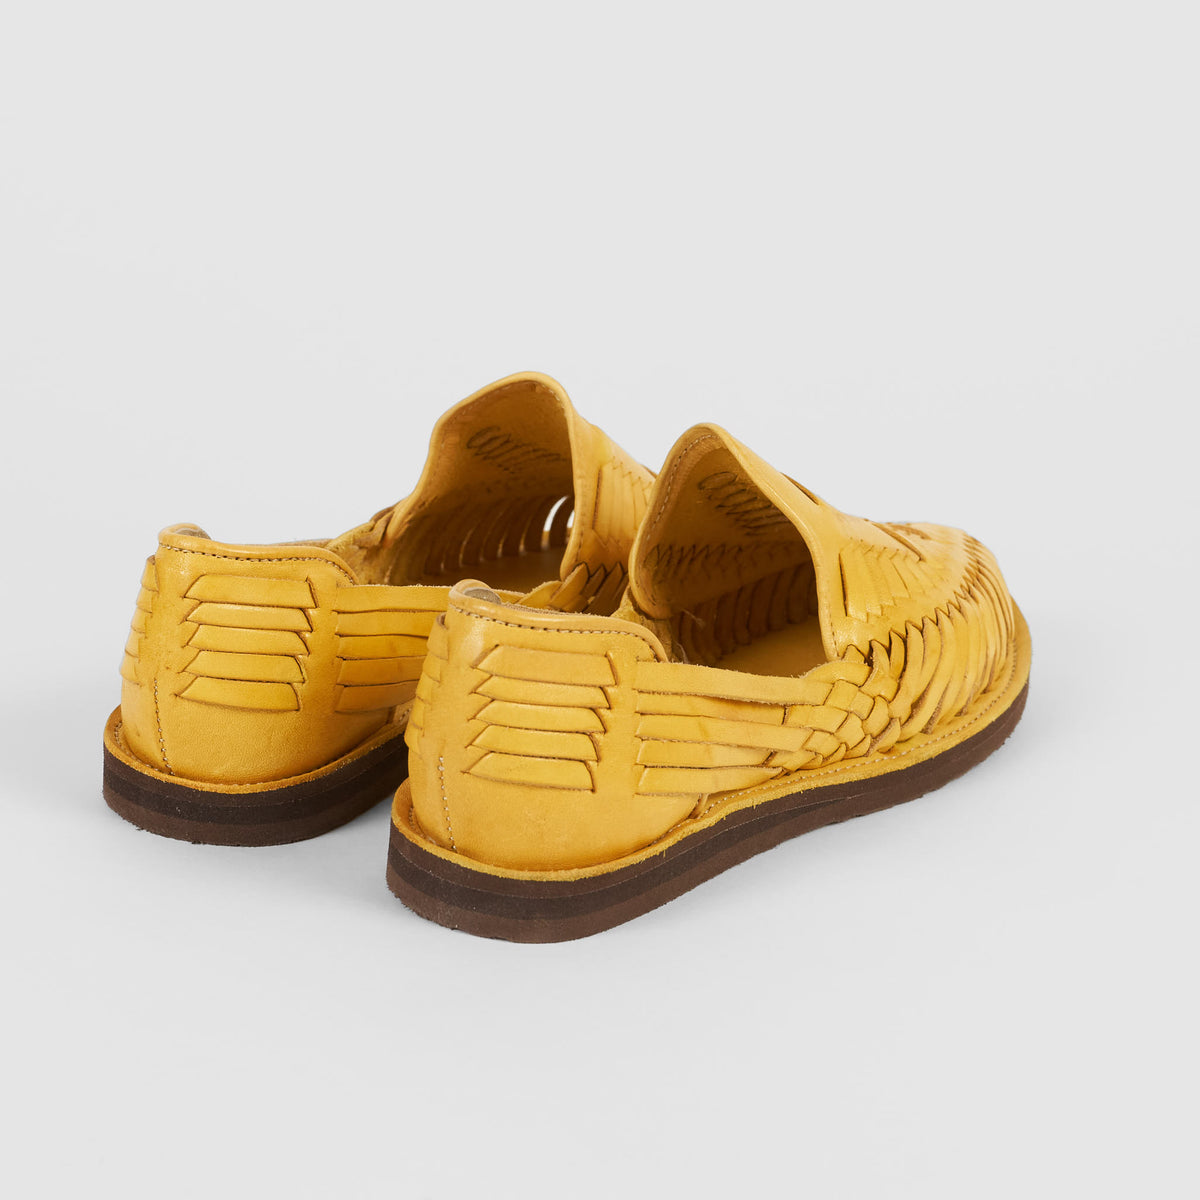 Chamula Braided Sandals